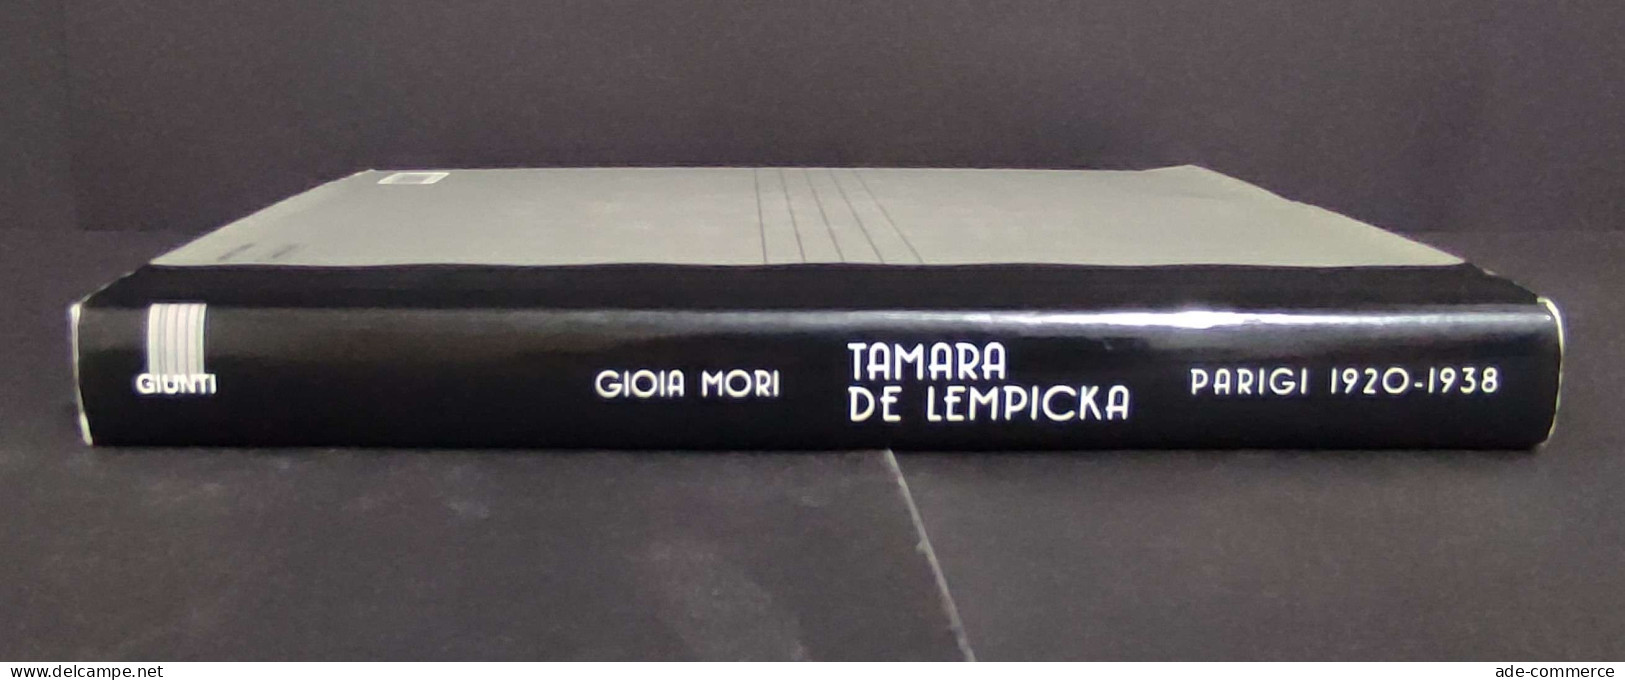 Tamara De Lempicka - Parigi 1920-1938 - G. Mori - Ed. Giunti - 1995 - Arts, Antiquity